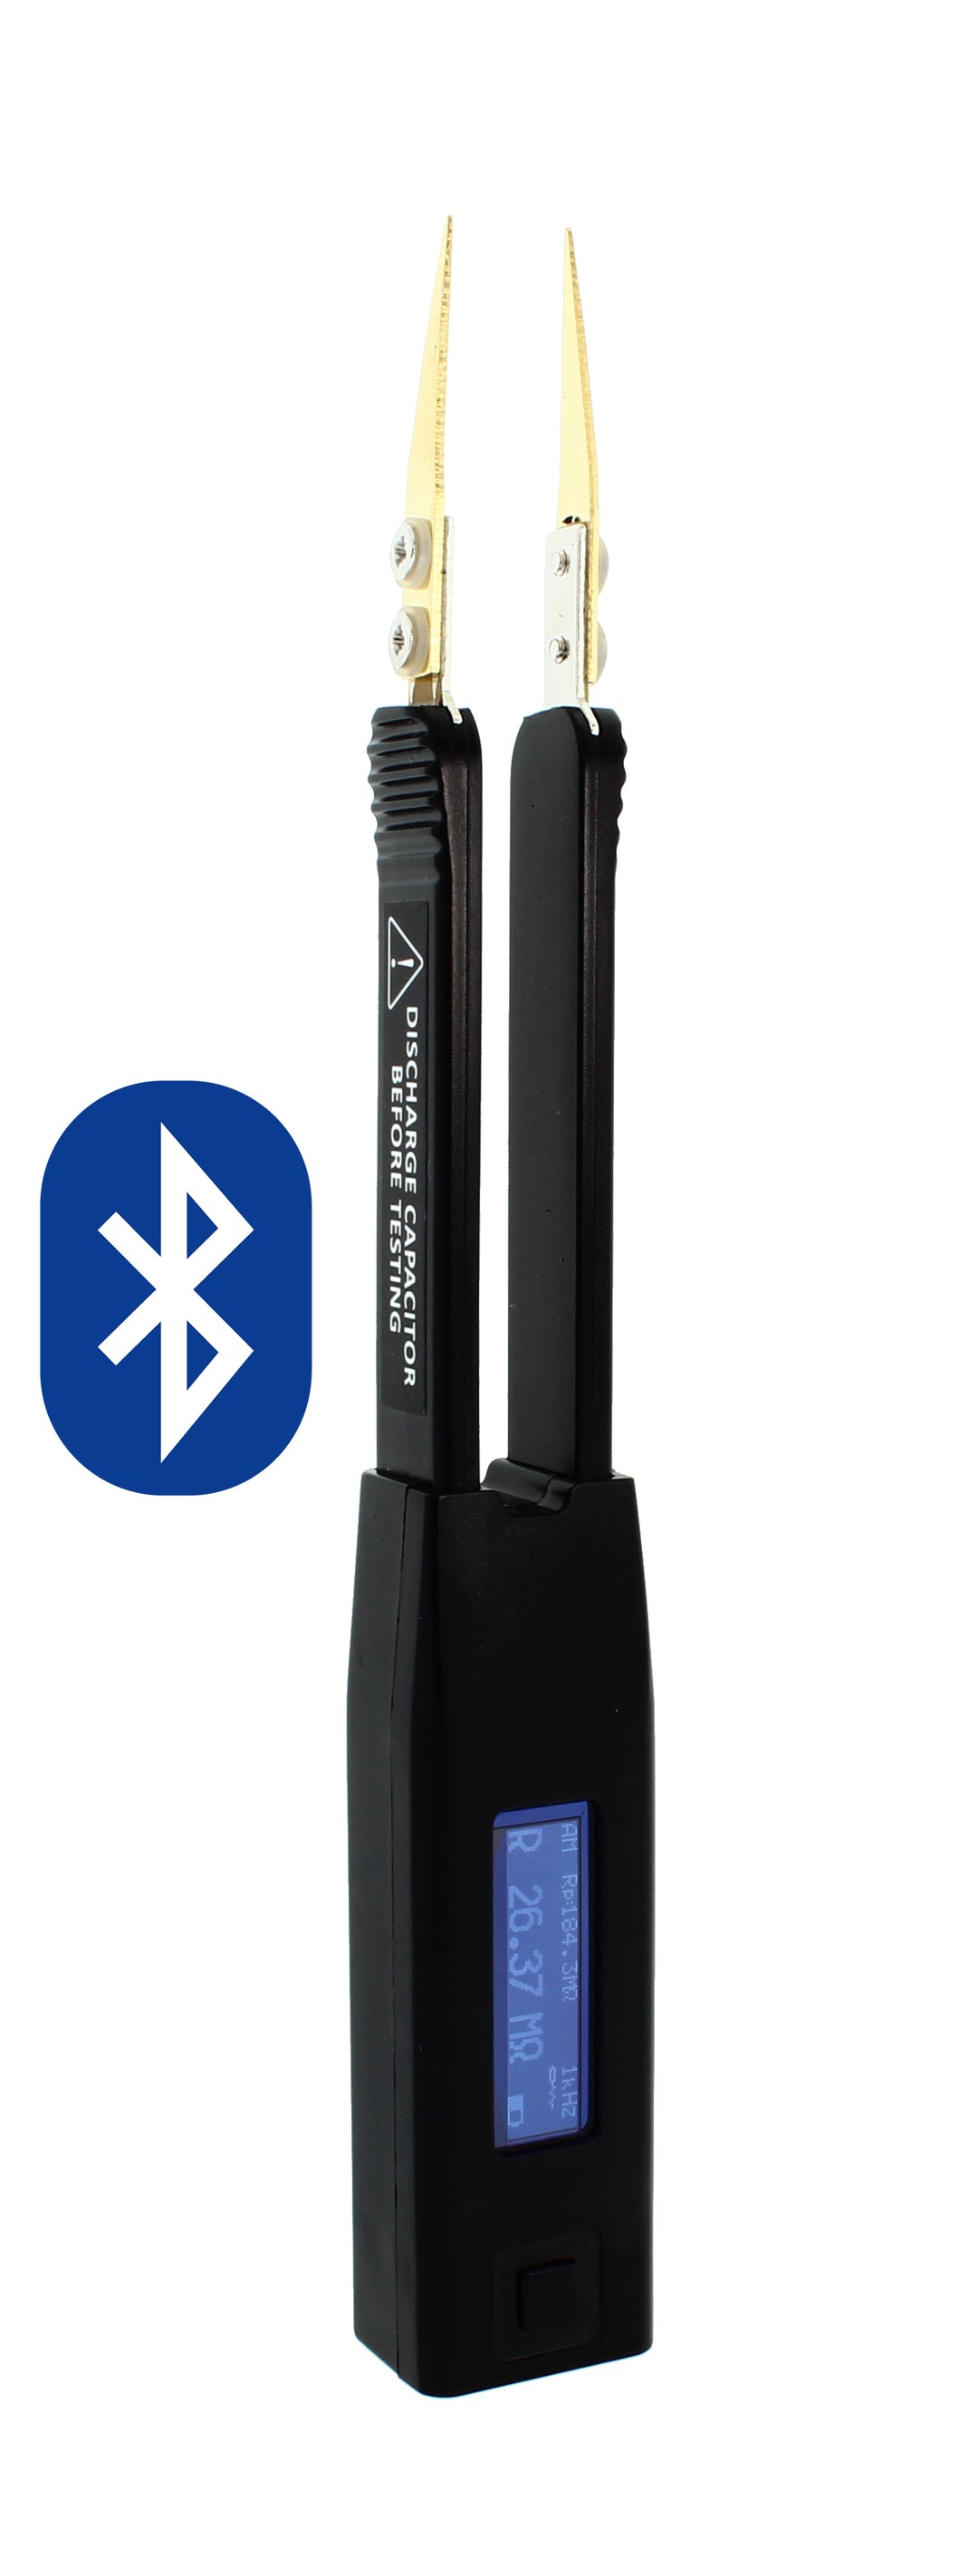 Excelta TM-500-BTW Rcl Meter - Hand Held - Bluetooth